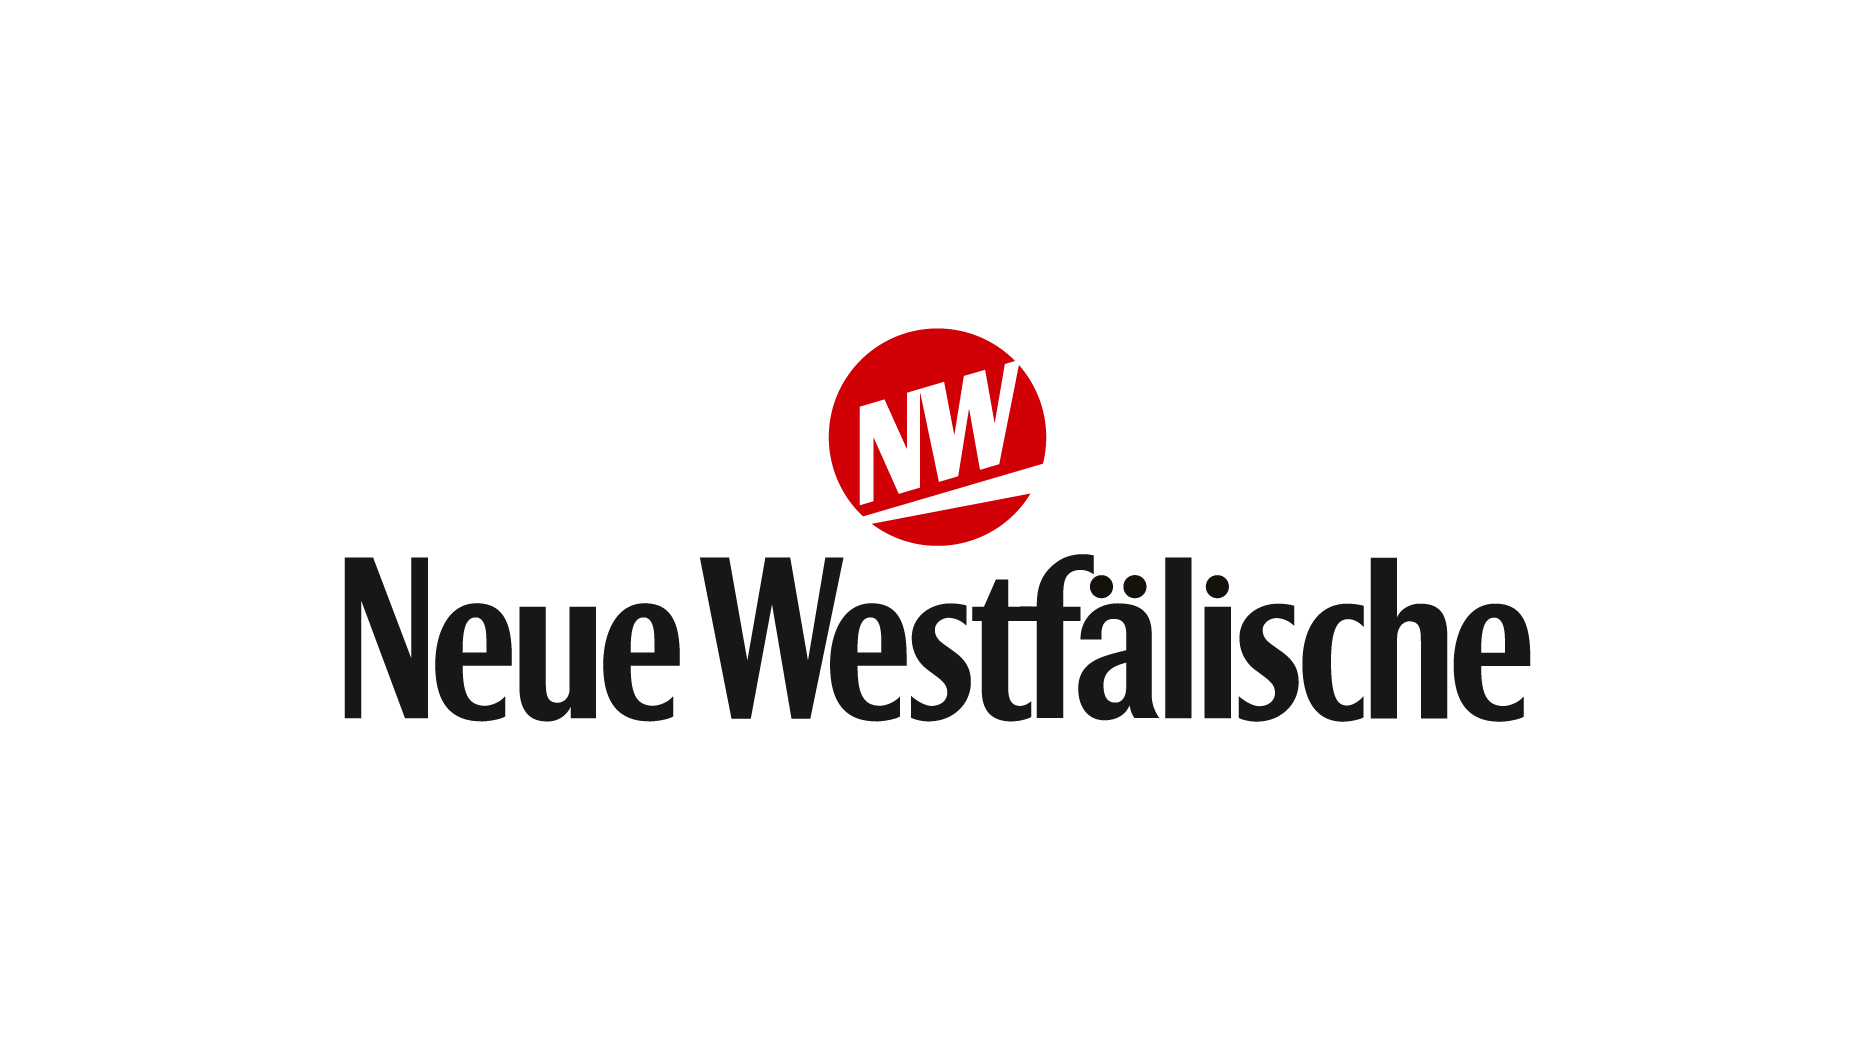 Logo Neue Westfälische